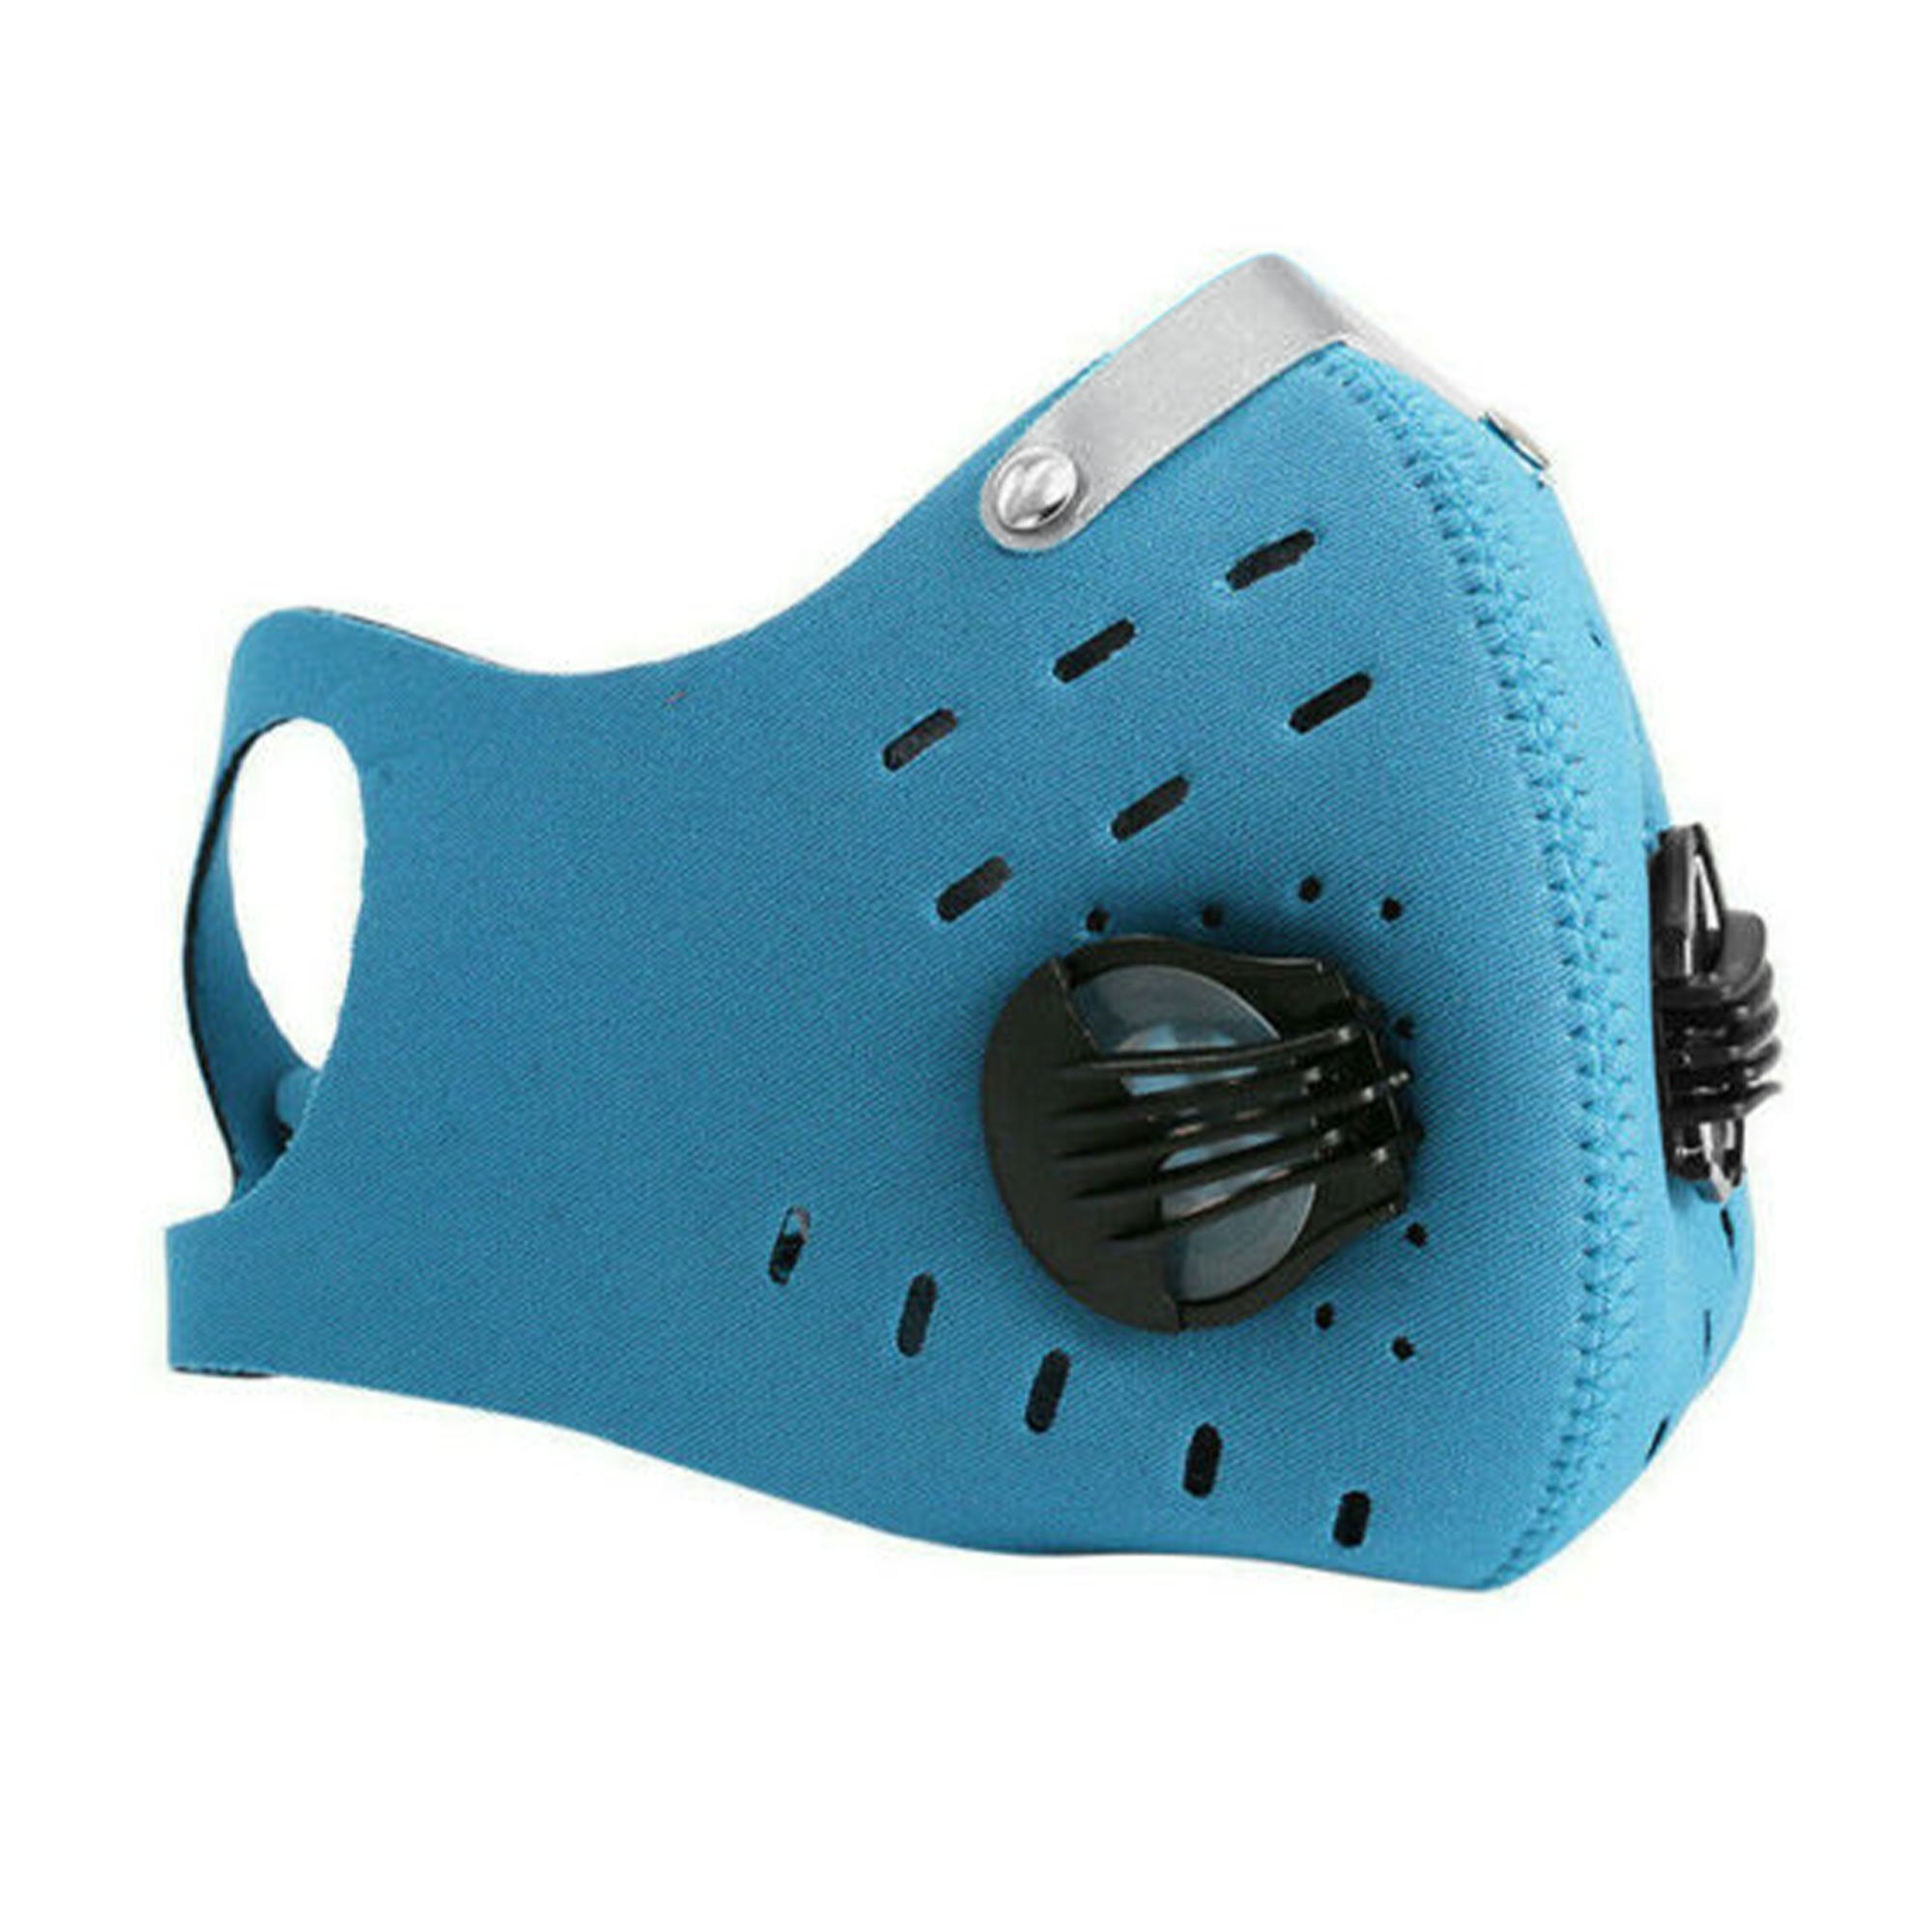 Blue Soft Safety Face Mask Reusable x 2  Carbon Filters & Flow Valve USA Seller 